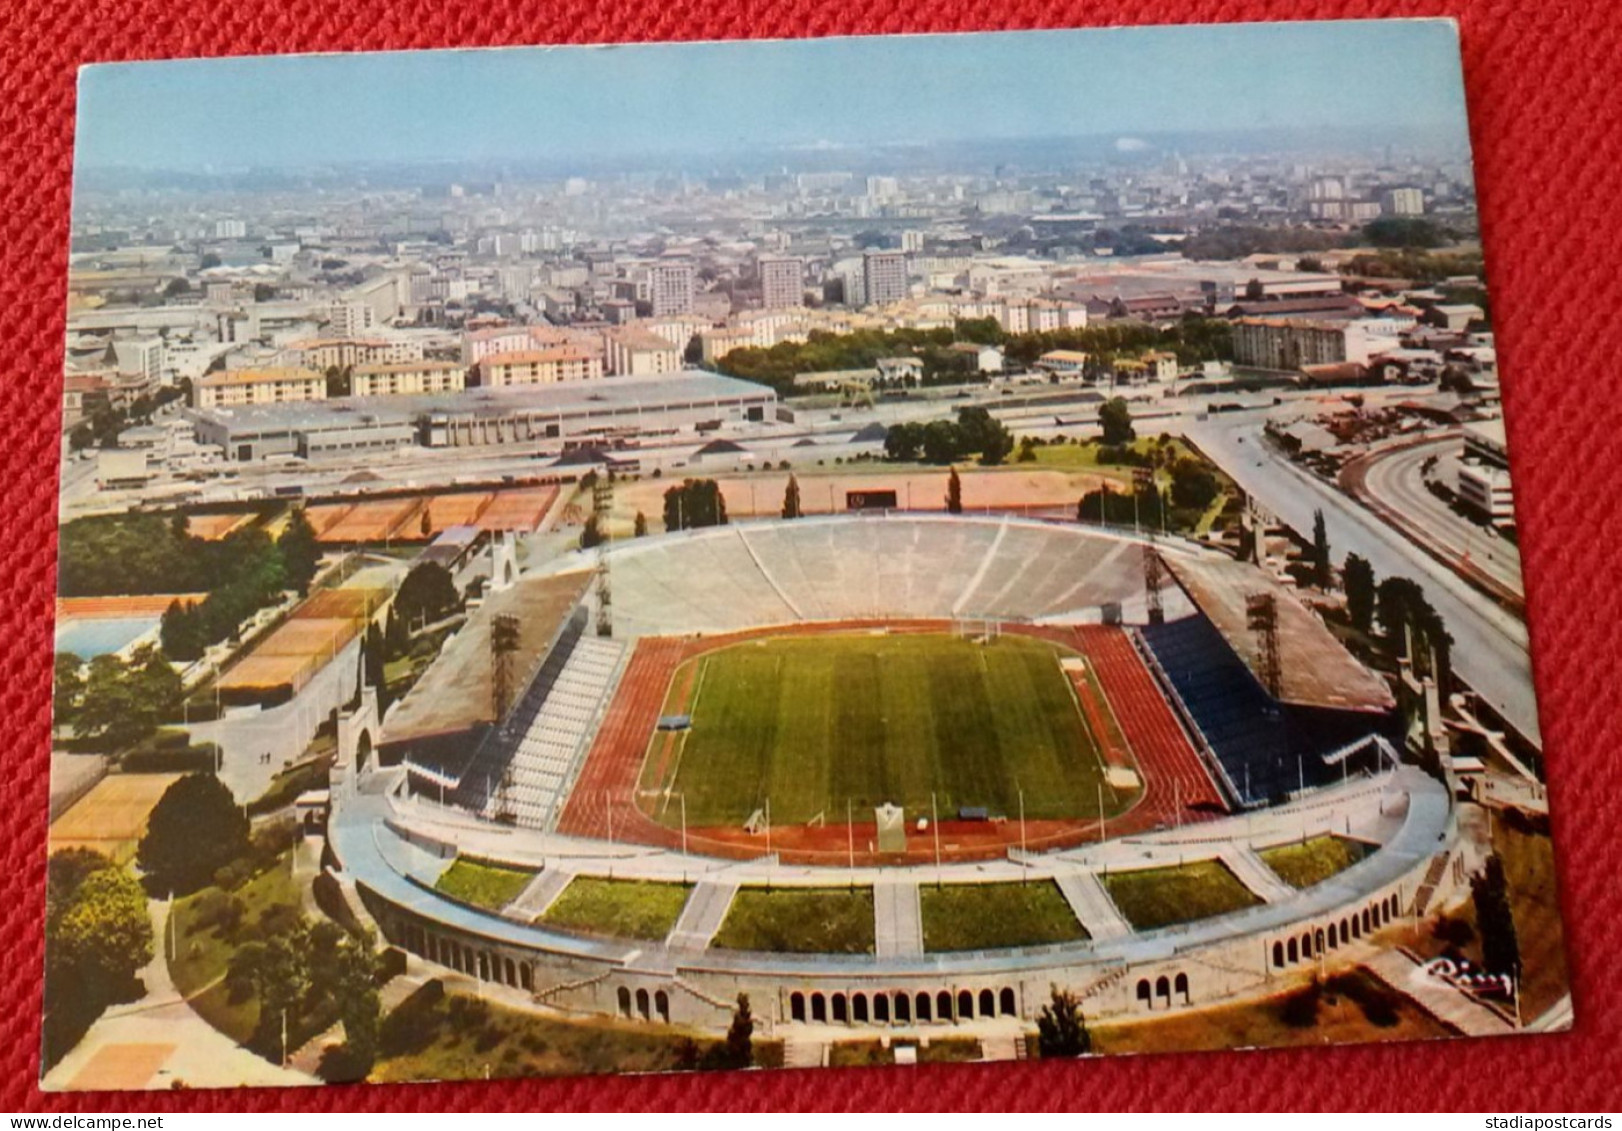 Lyon Olimpique Gerland Municipal Stadium Cartolina Stadio Postcard Stadion AK Carte Postale Stade Estadio - Calcio